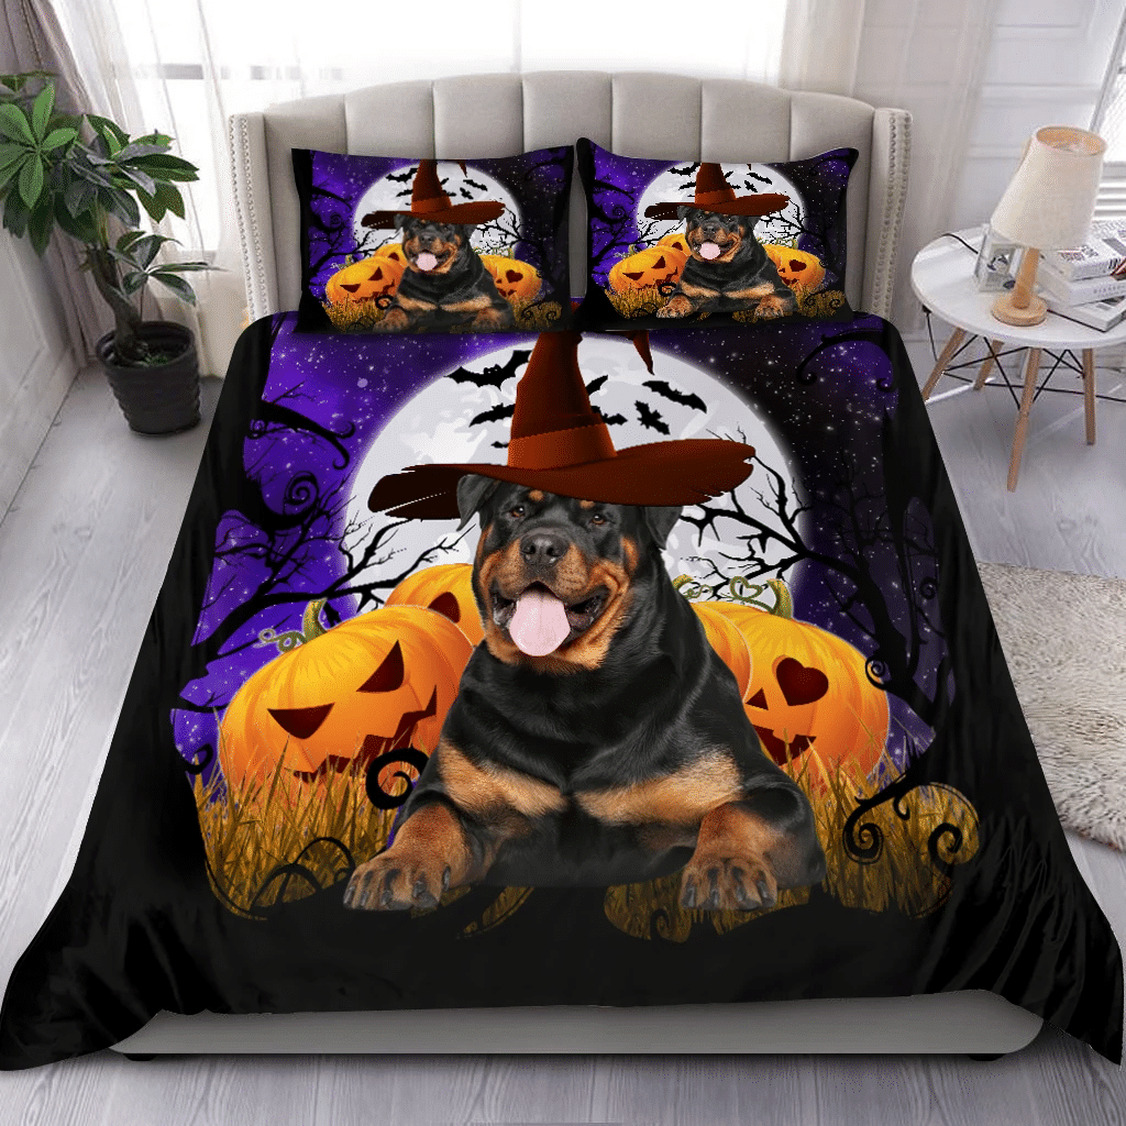 Rottweiler Dog Halloween Quilt Bedding Set - Pumkin And Bat Comforter Set Twin Queen King Size